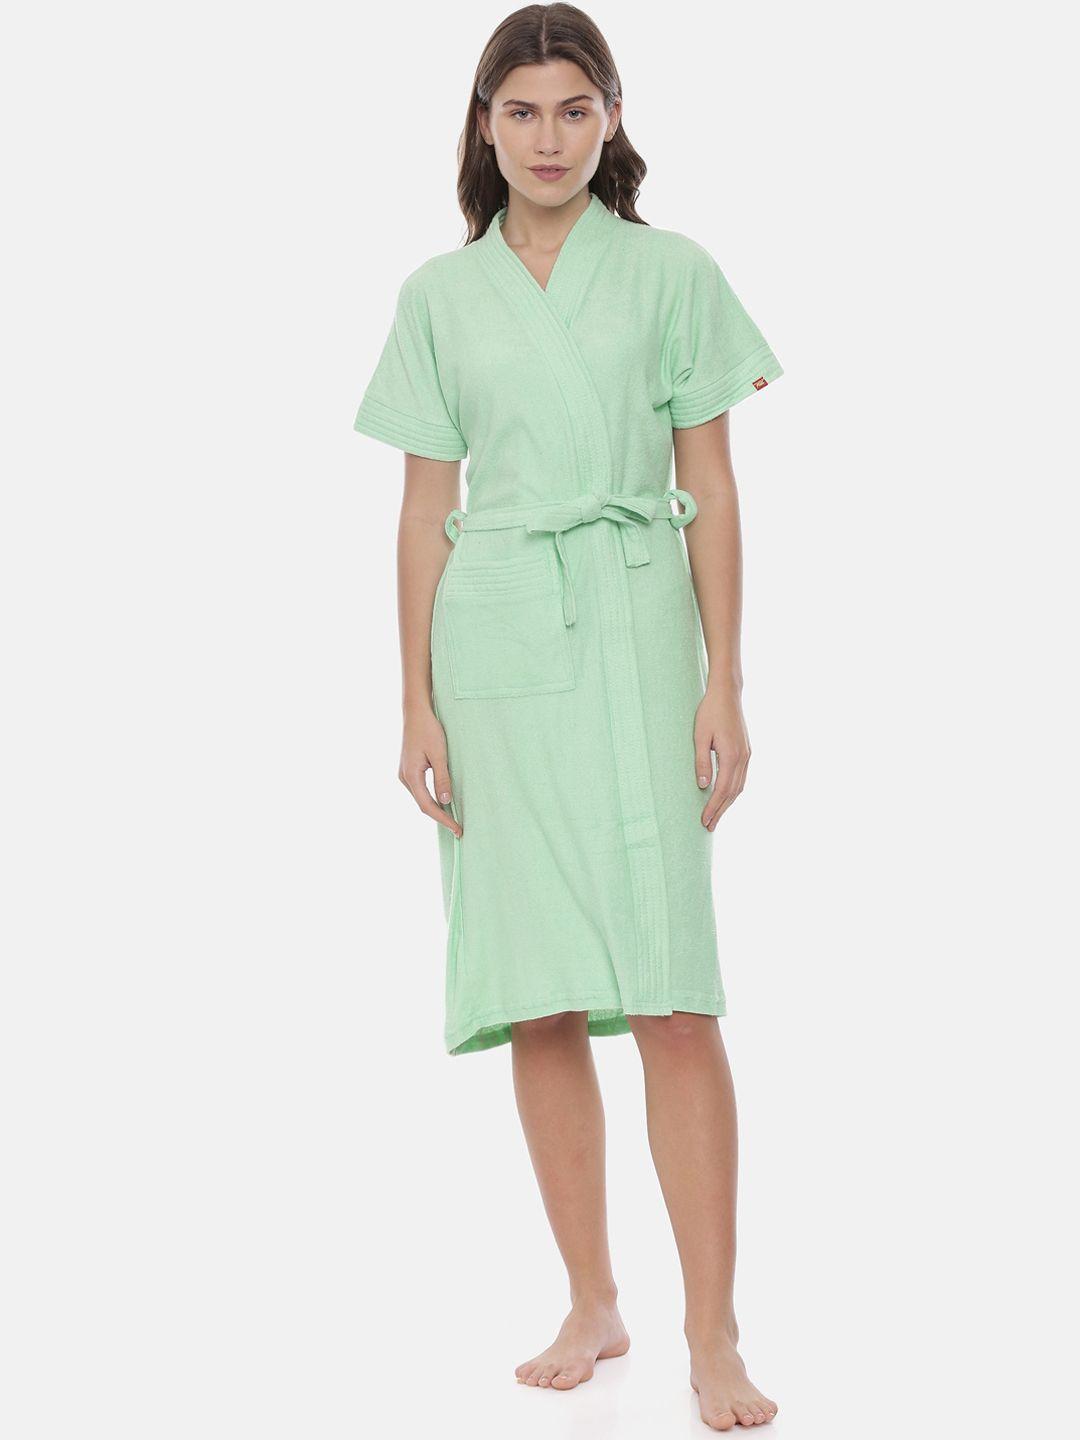 goldstroms-women-green-solid-bathrobe-with-belt